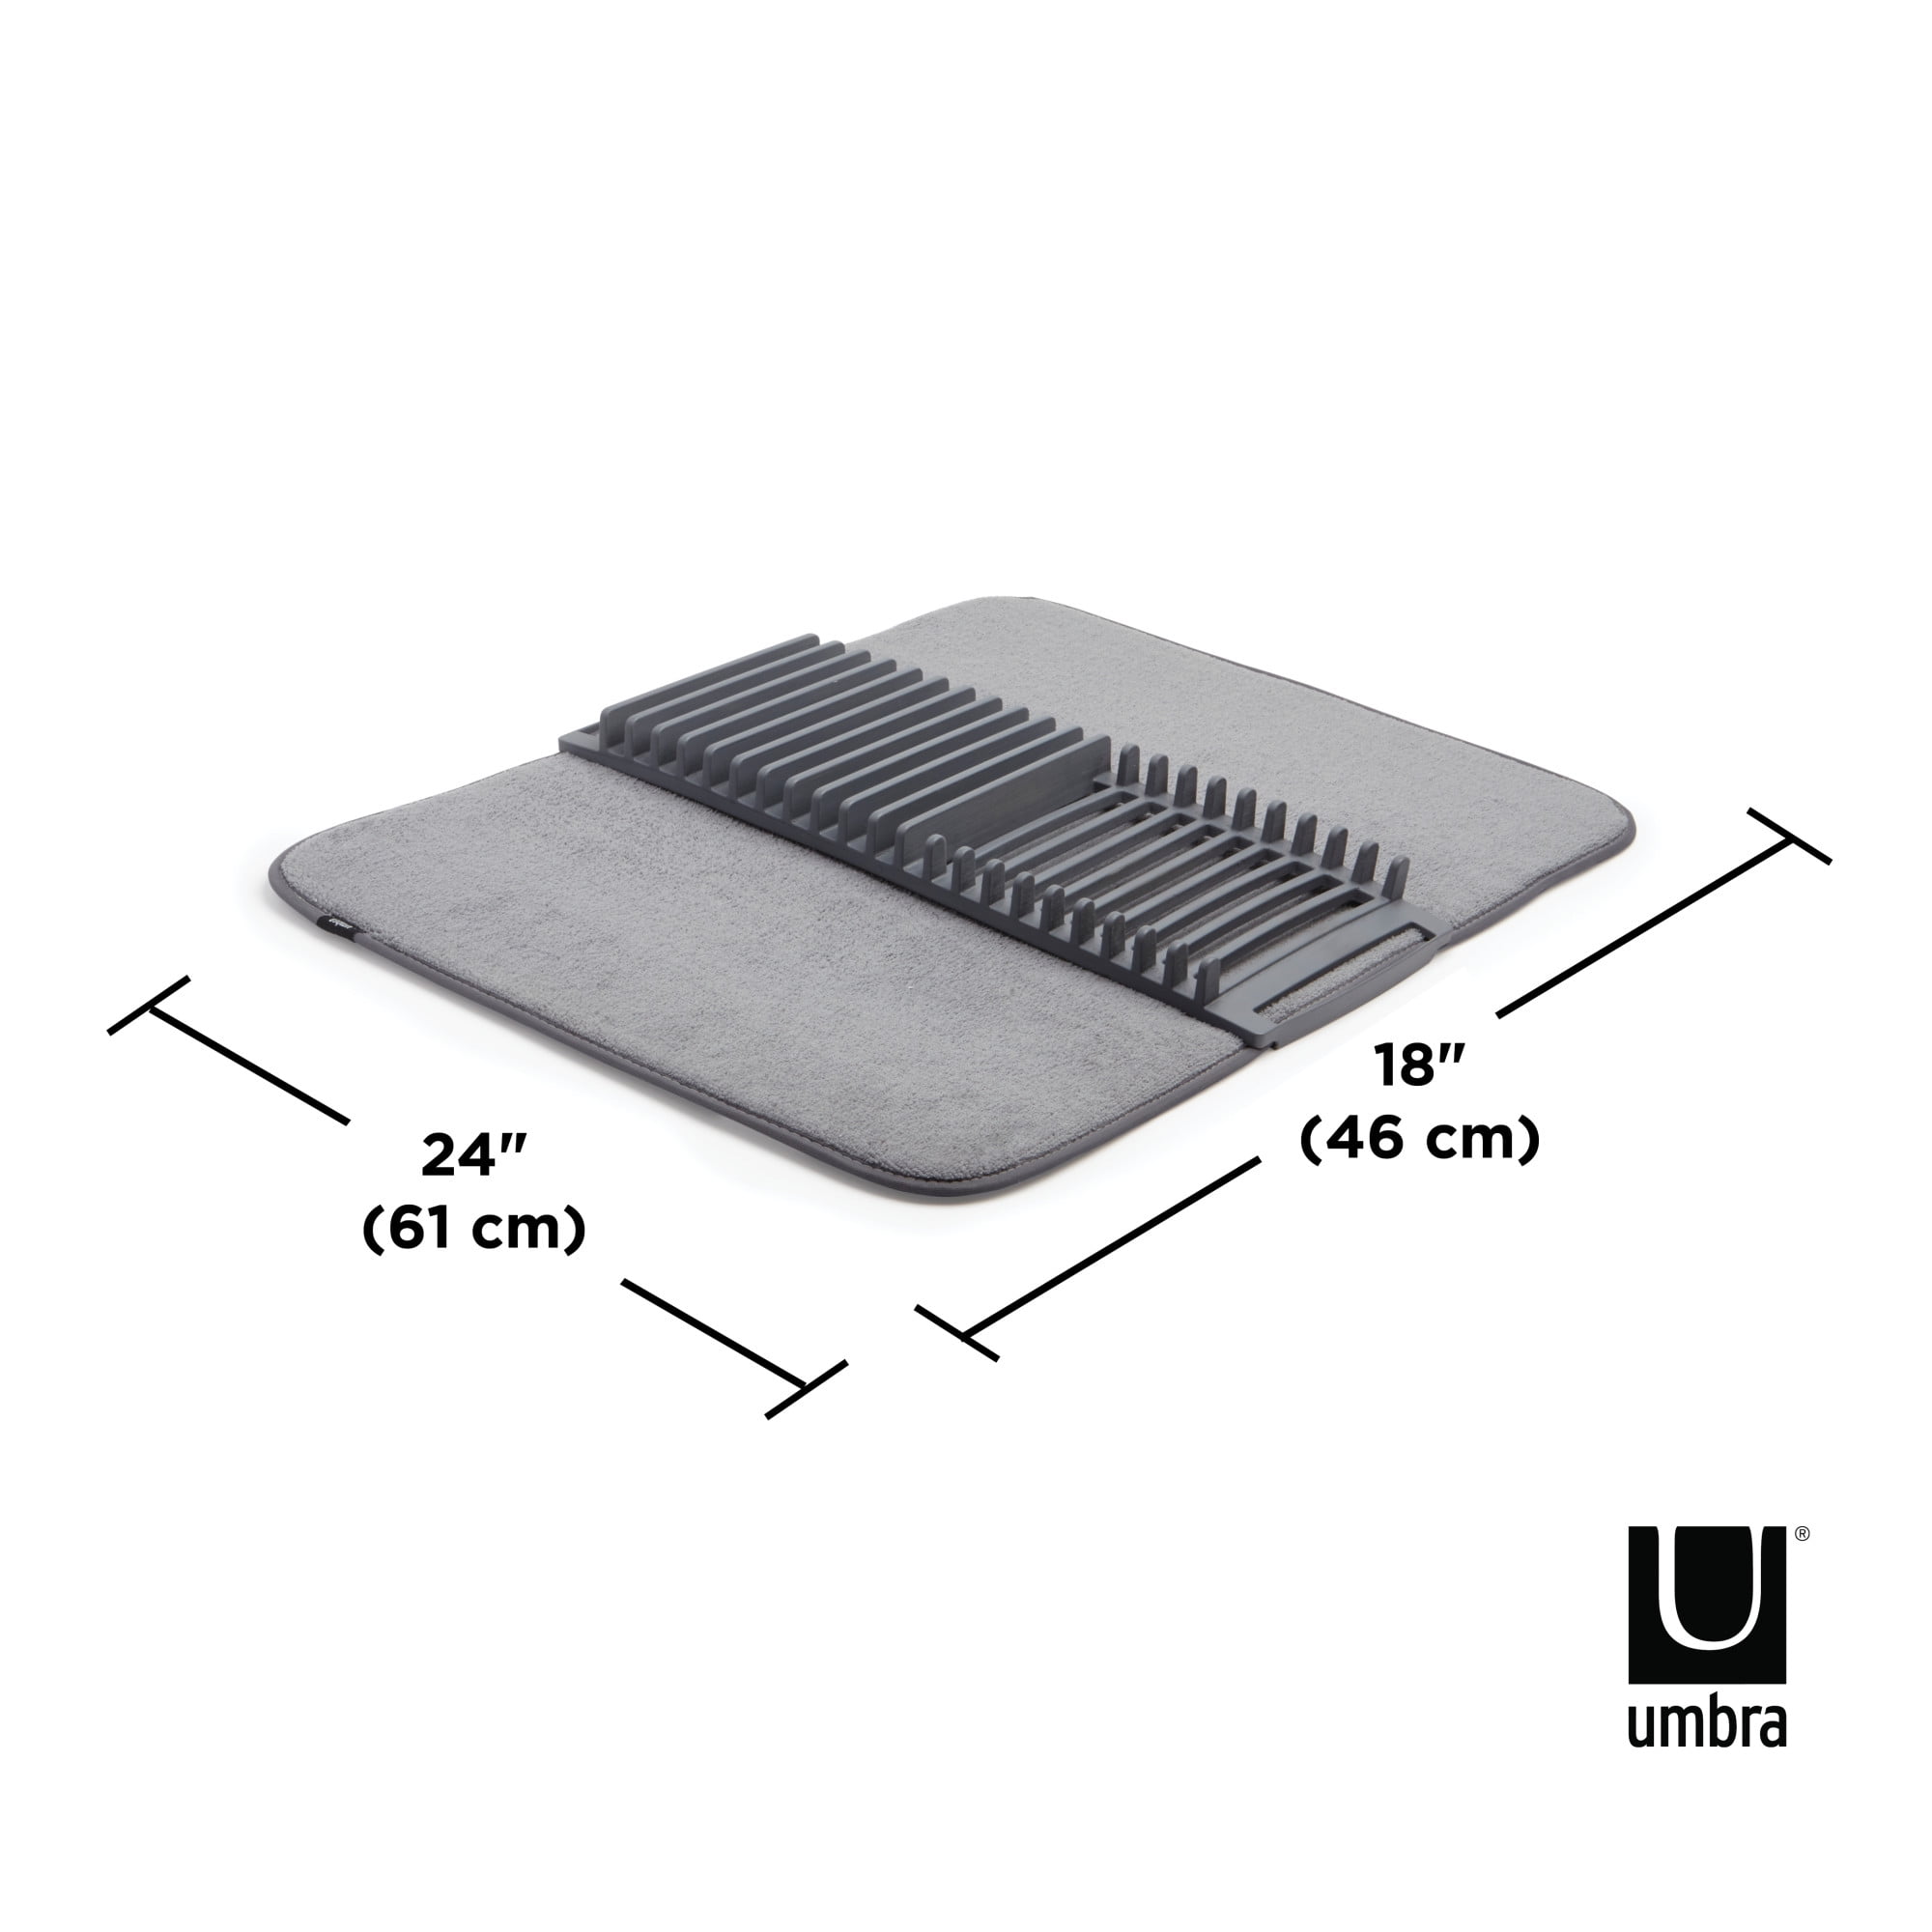 Umbra Udry Dish Drying Rack And Microfiber Dish Drying Mat